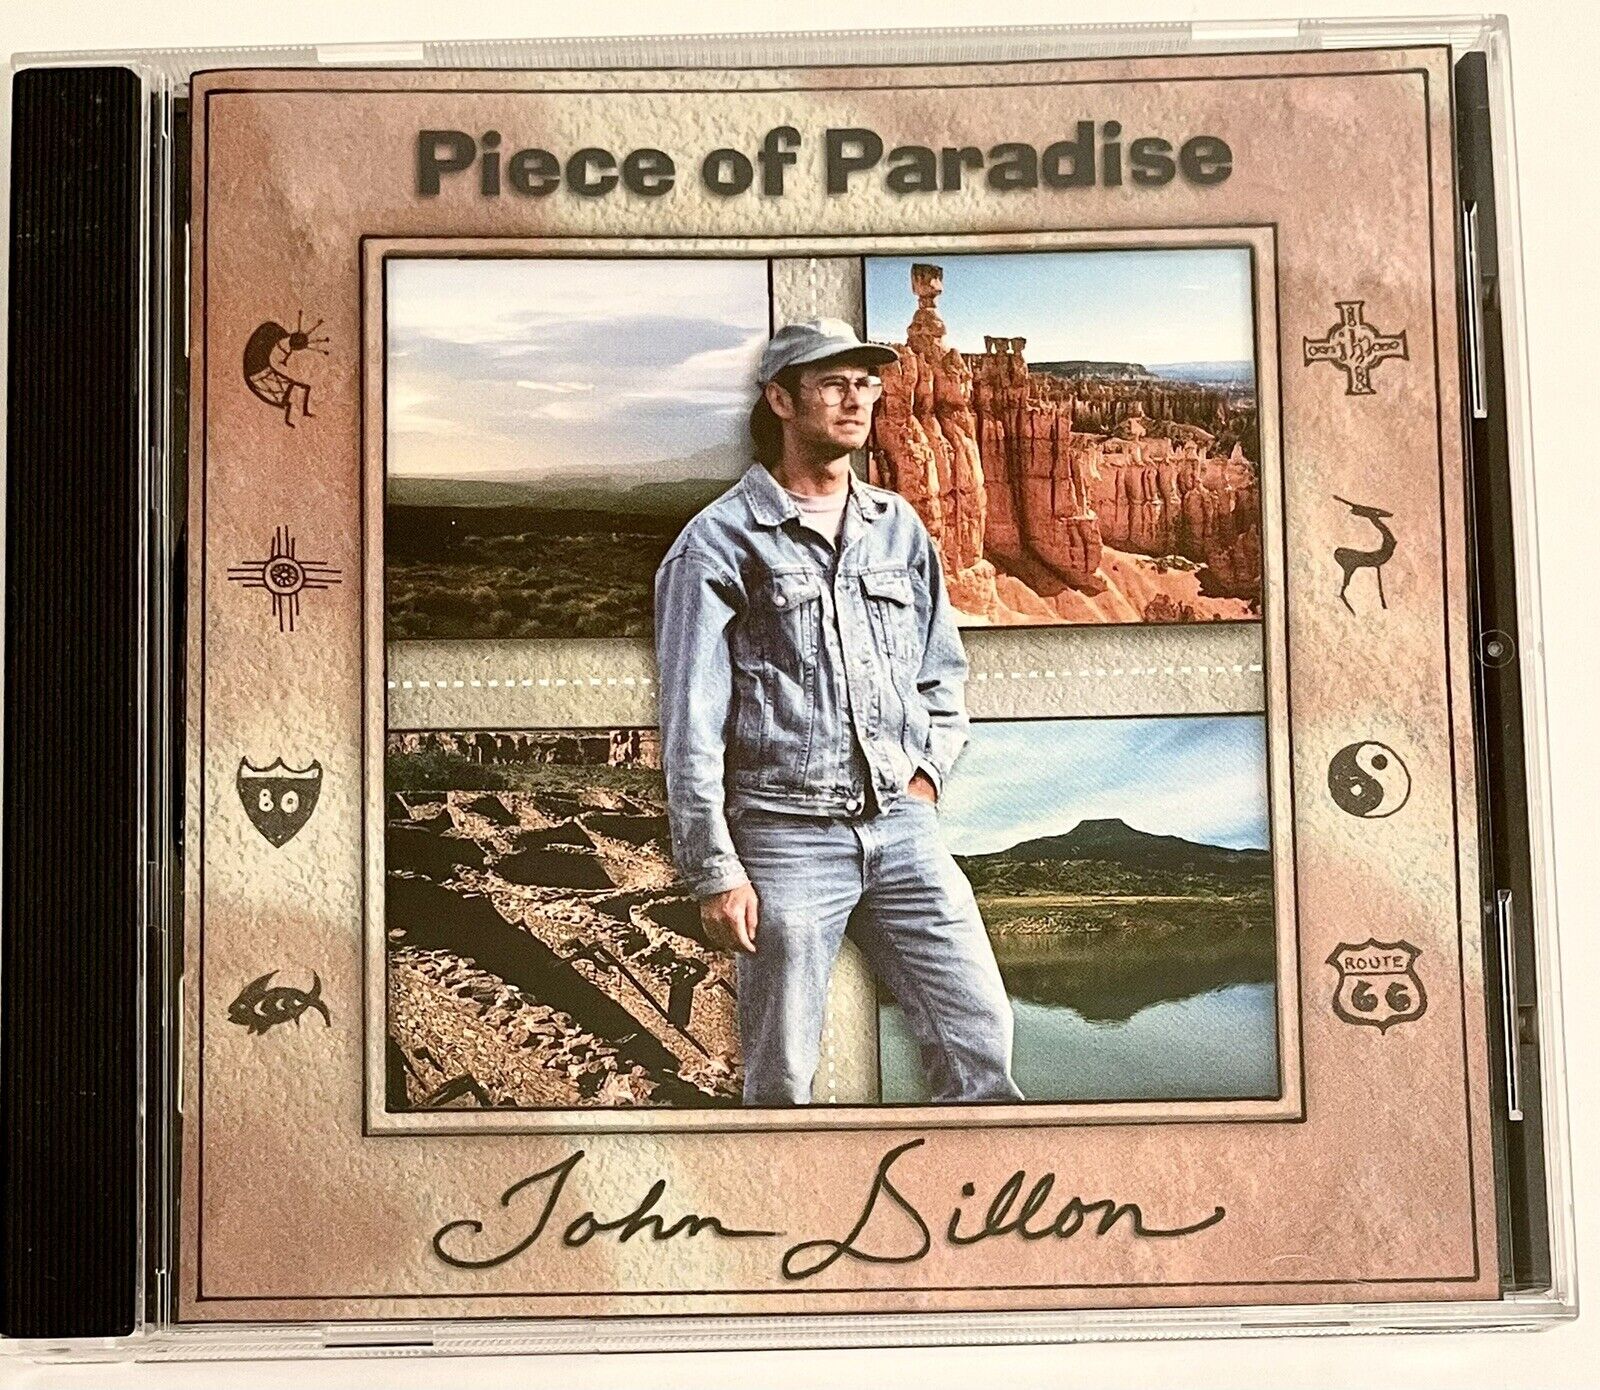 John Dillon, Piece Of Paradise, CD, 1998